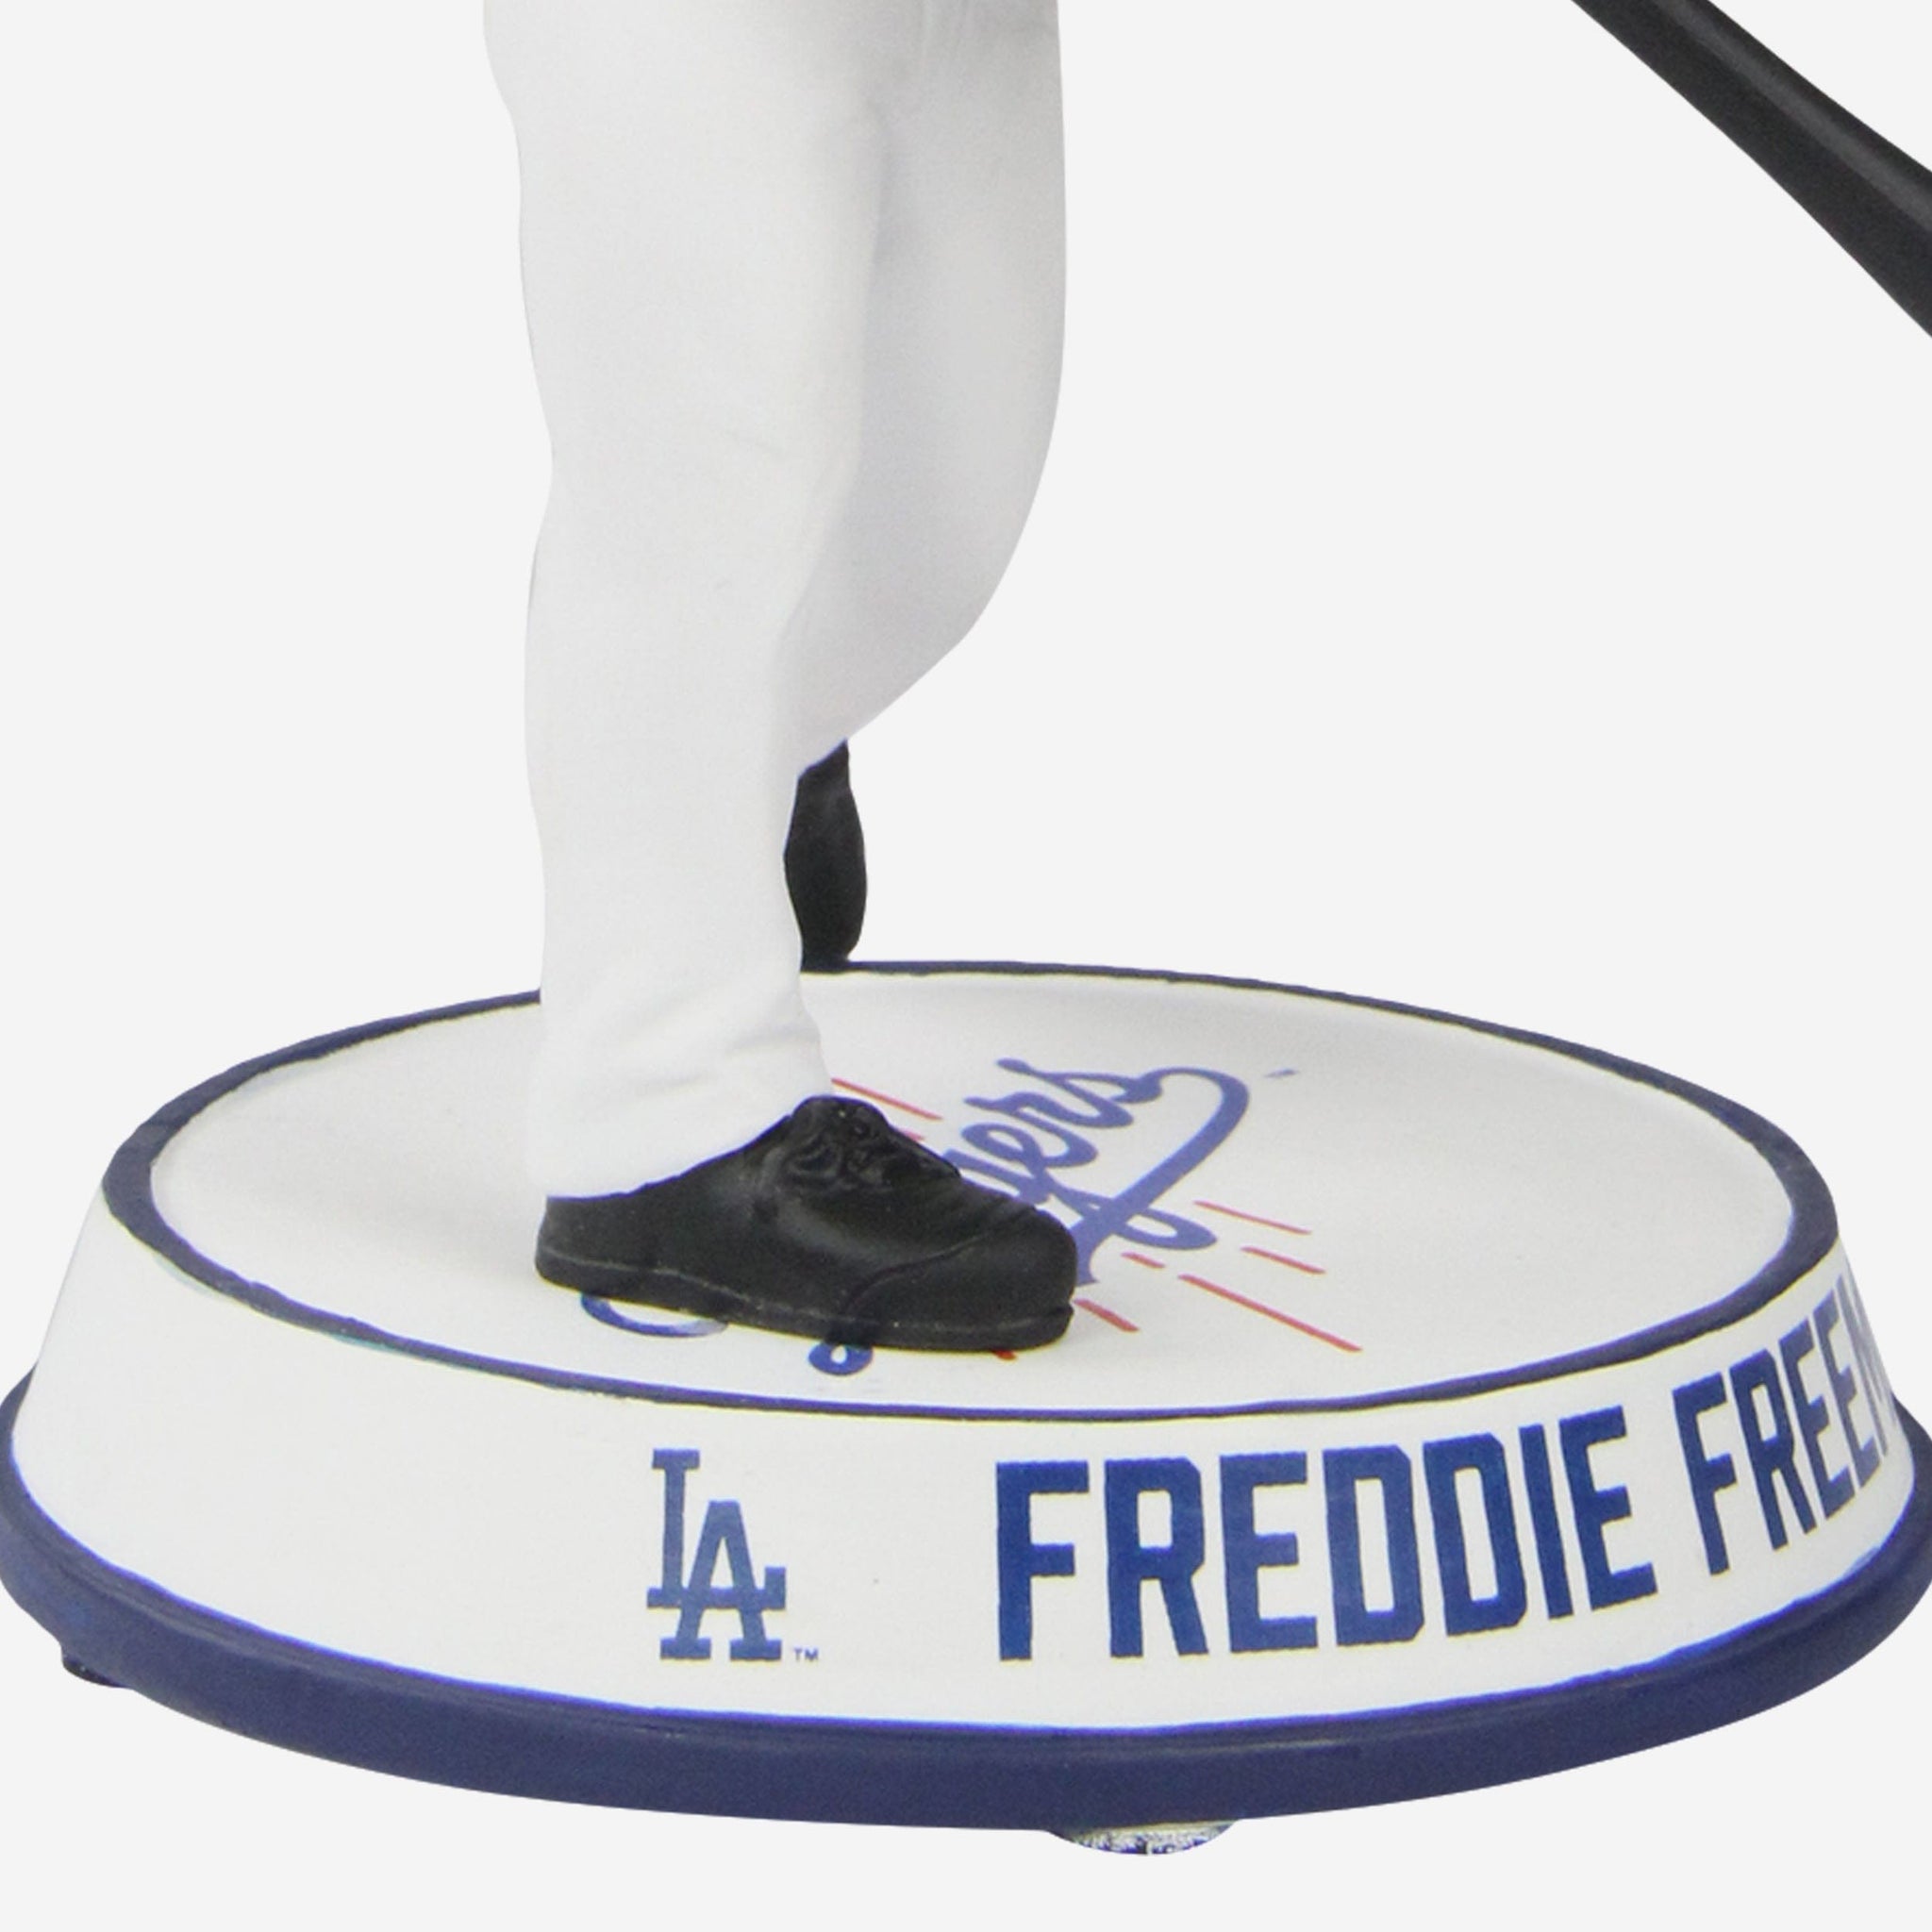 Foco Releases Freddie Freeman Dodgers City Connect Bobblehead 